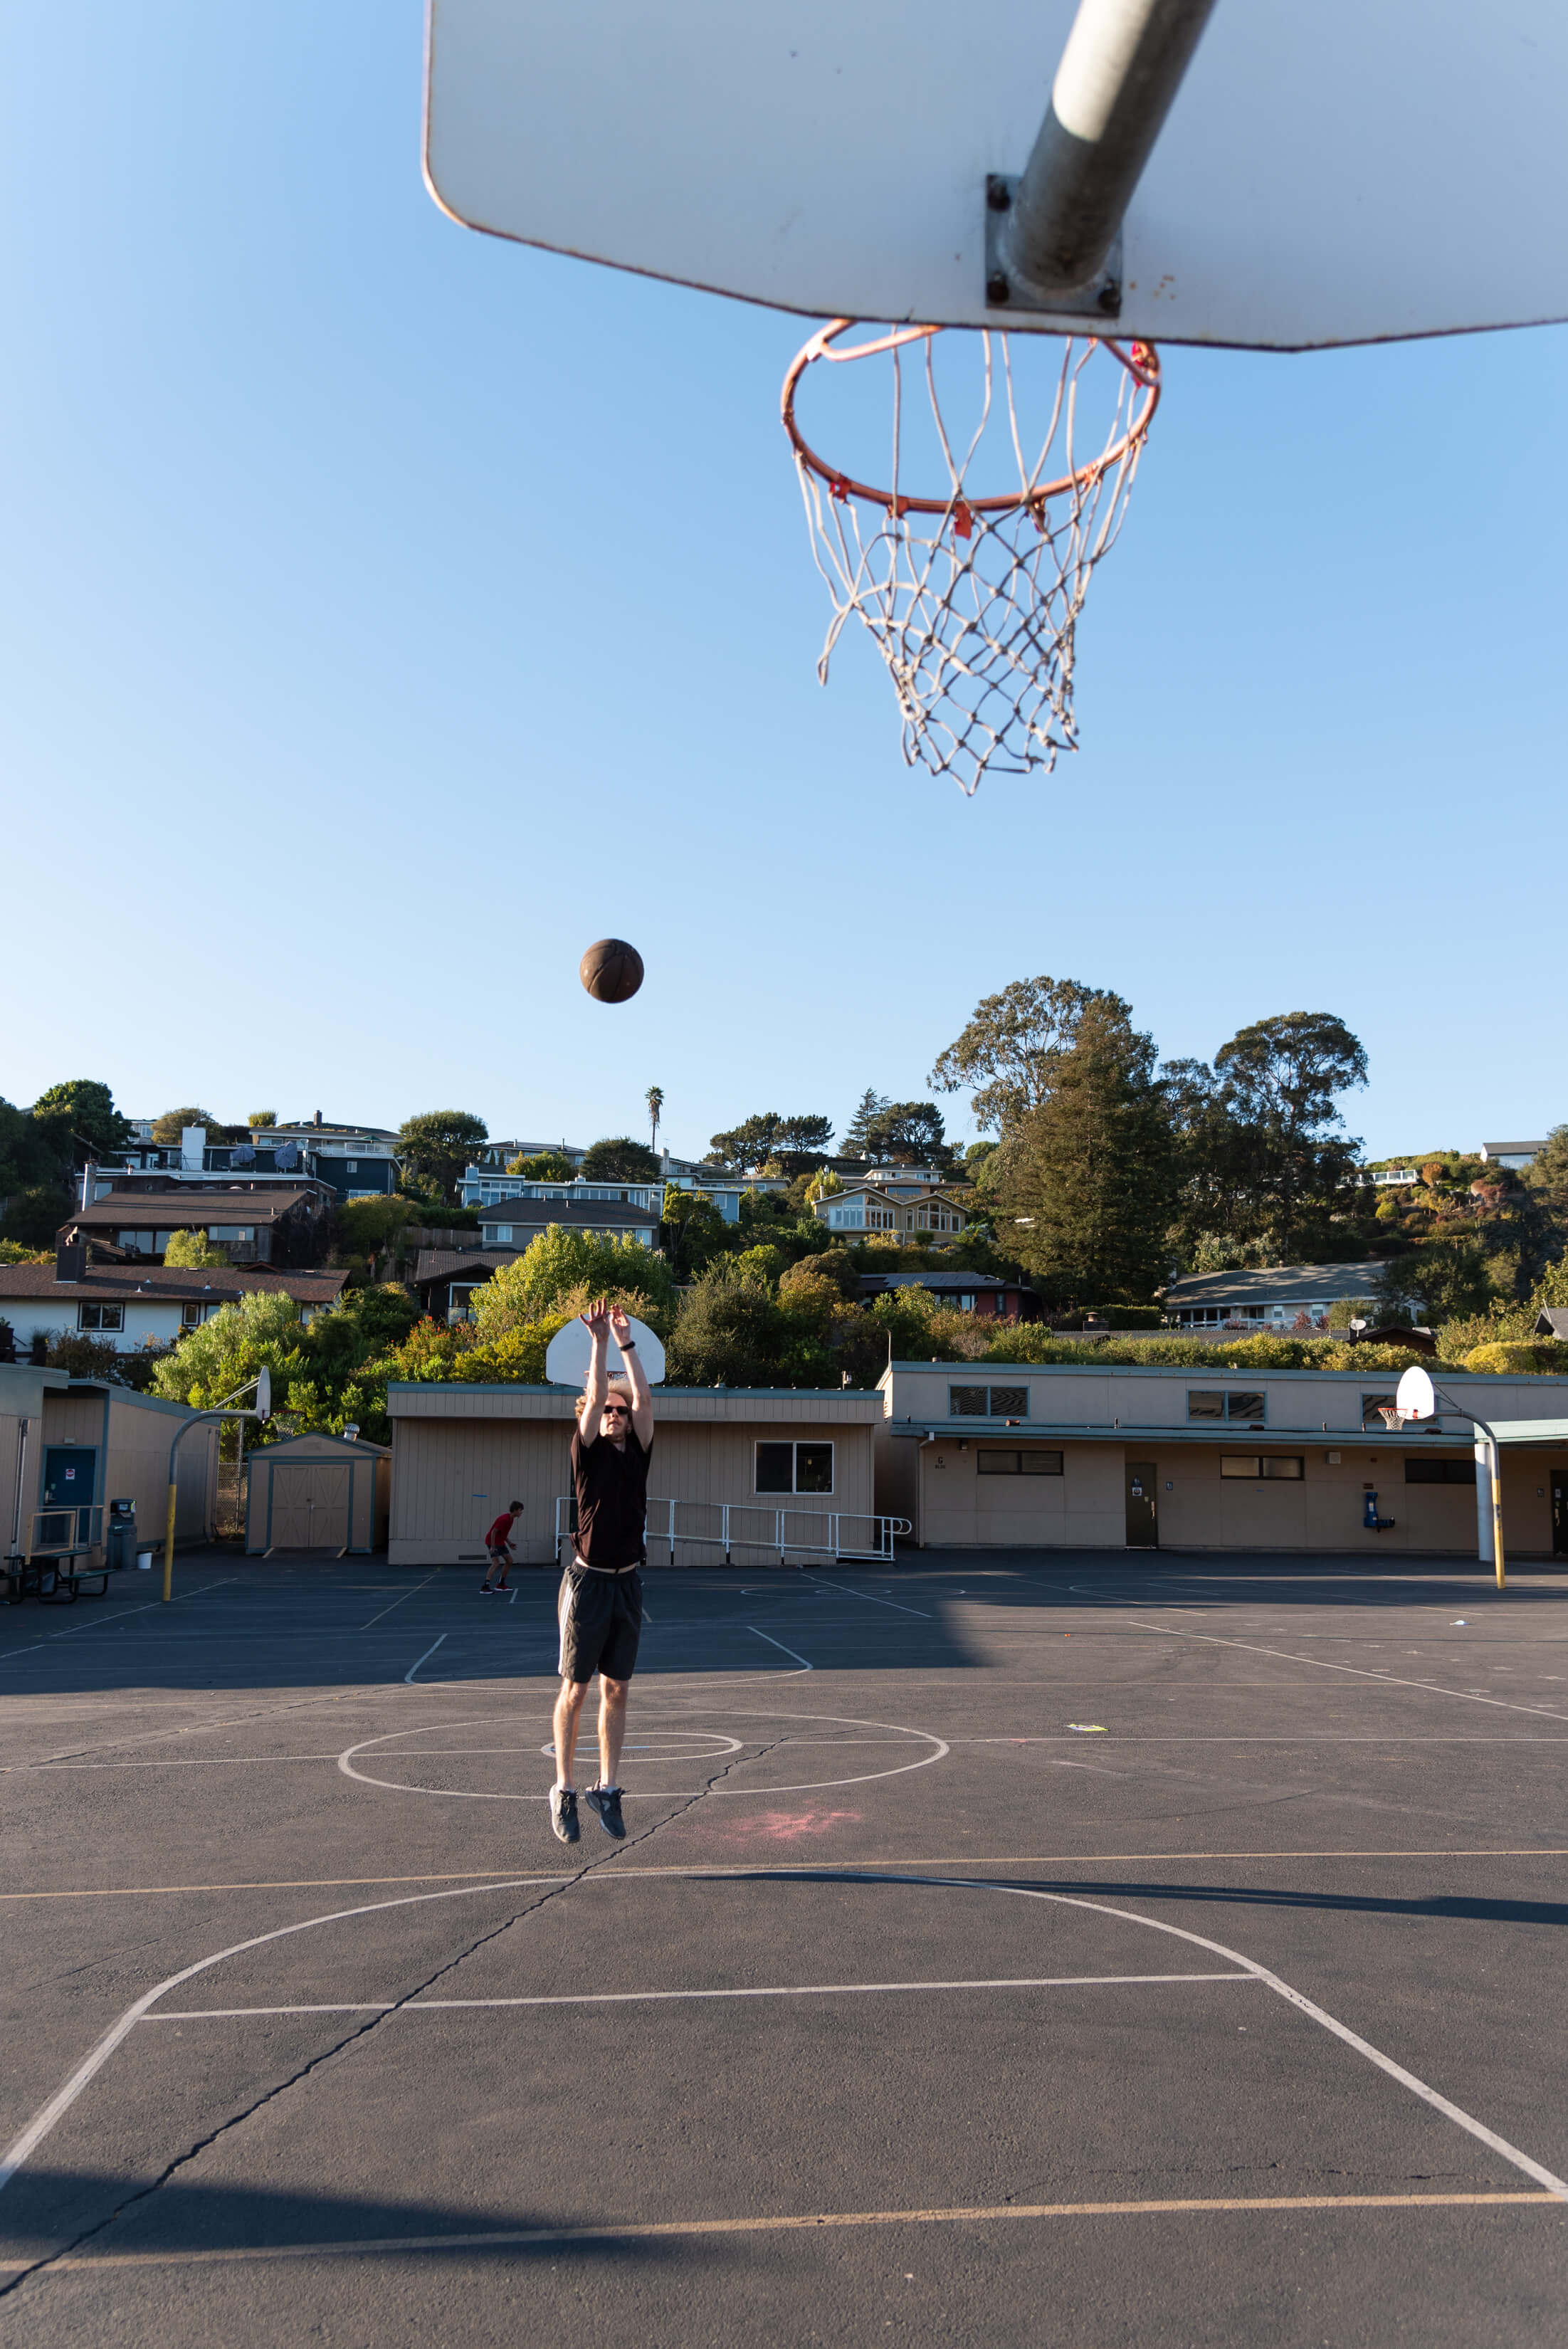 Person shooting basketball into hoop